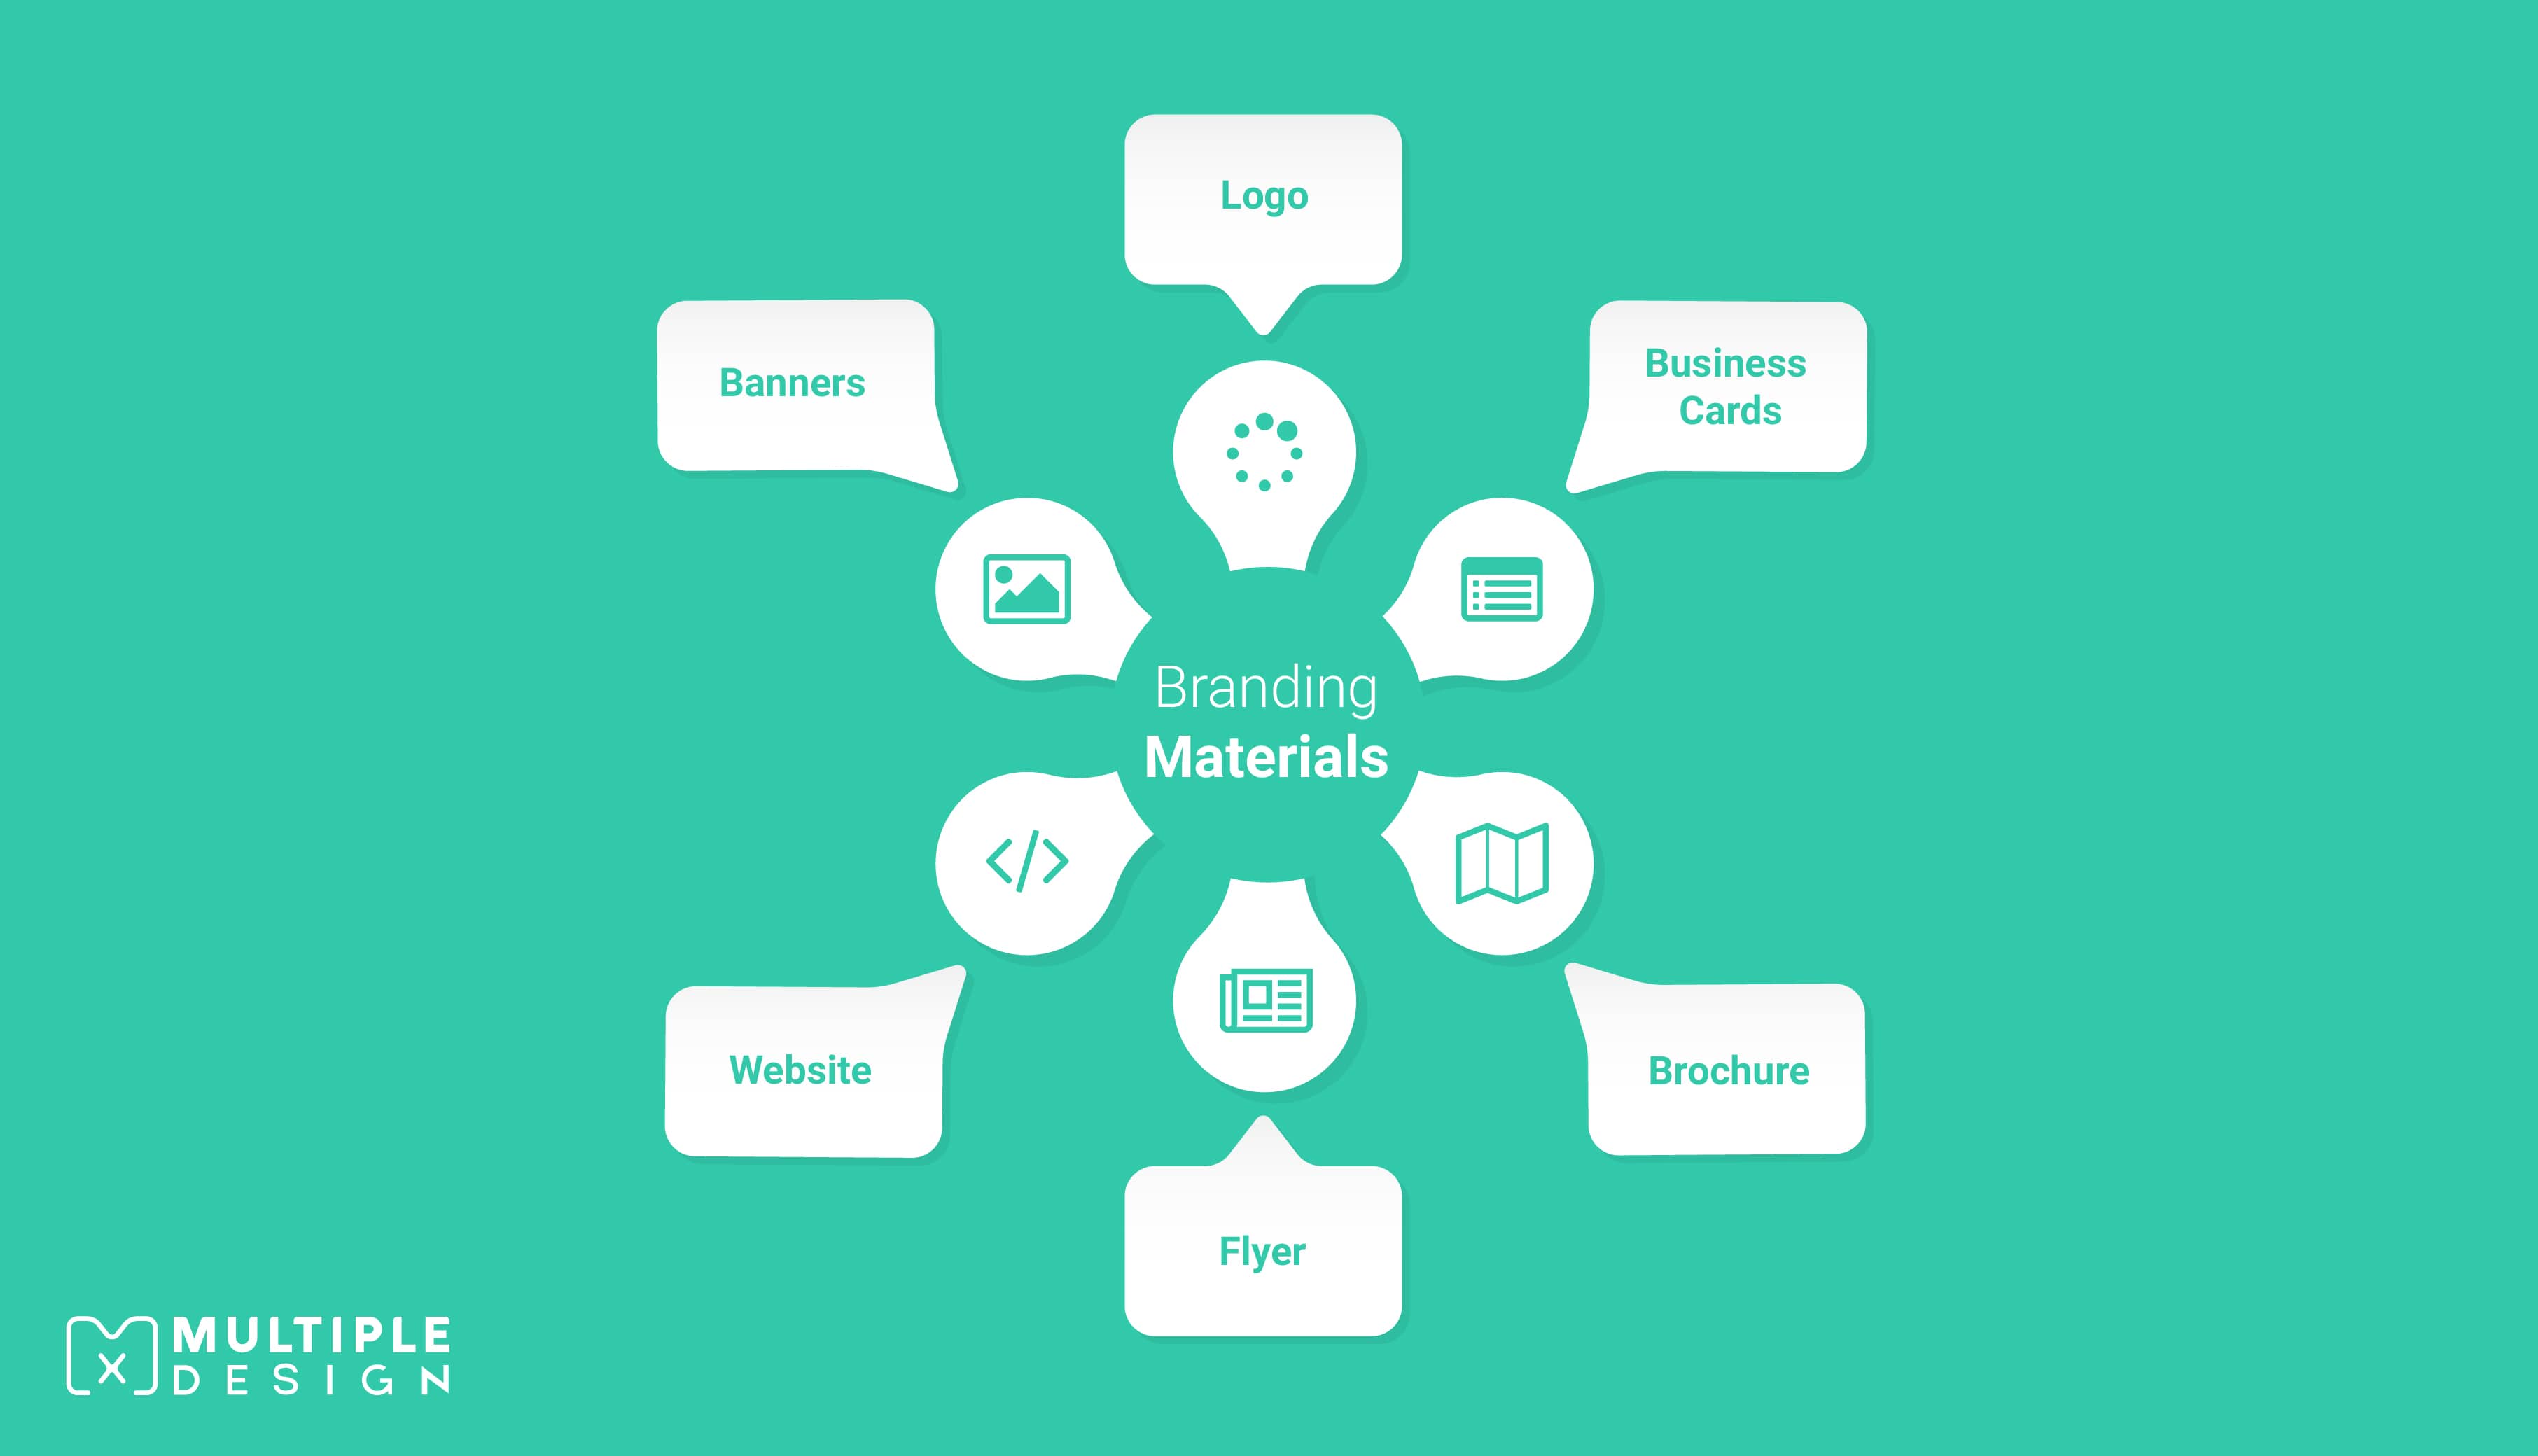 Branding Materials - Logo, Business Cards, Brochure, Flyer, Website, Banners